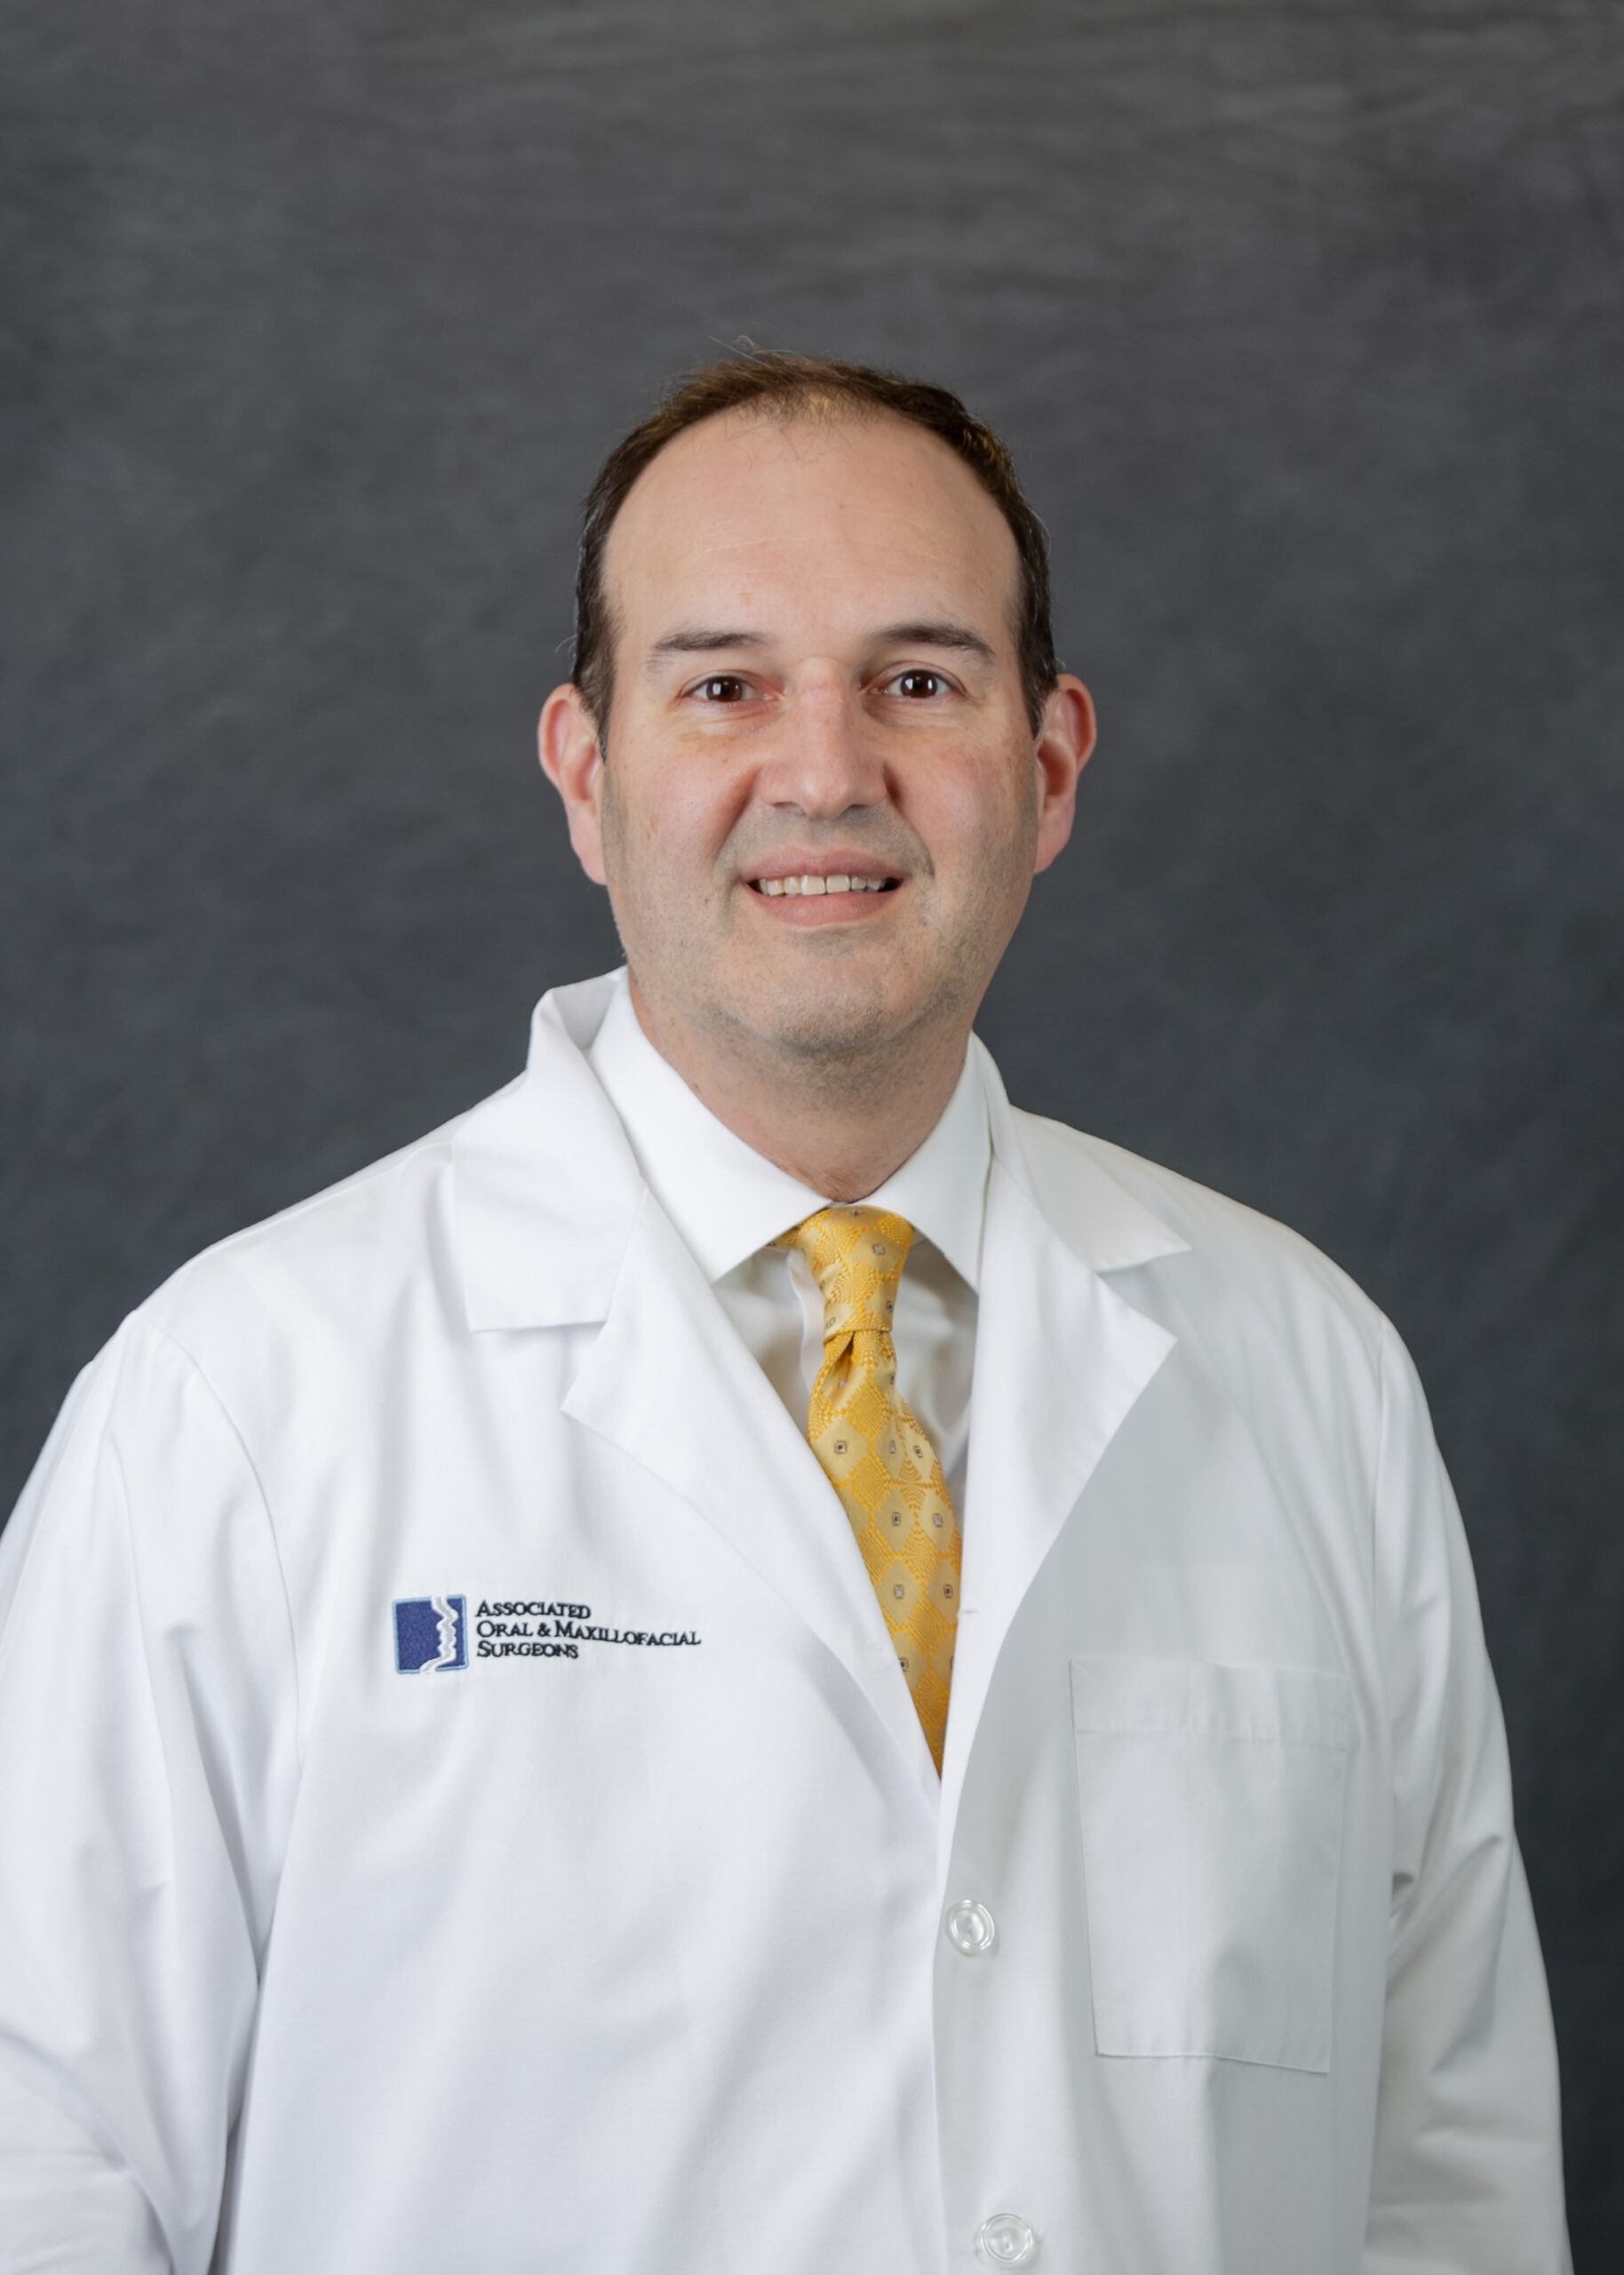 Dr Robert Busch an oral surgeon at Associated Oral and Maxillofacial Surgeons